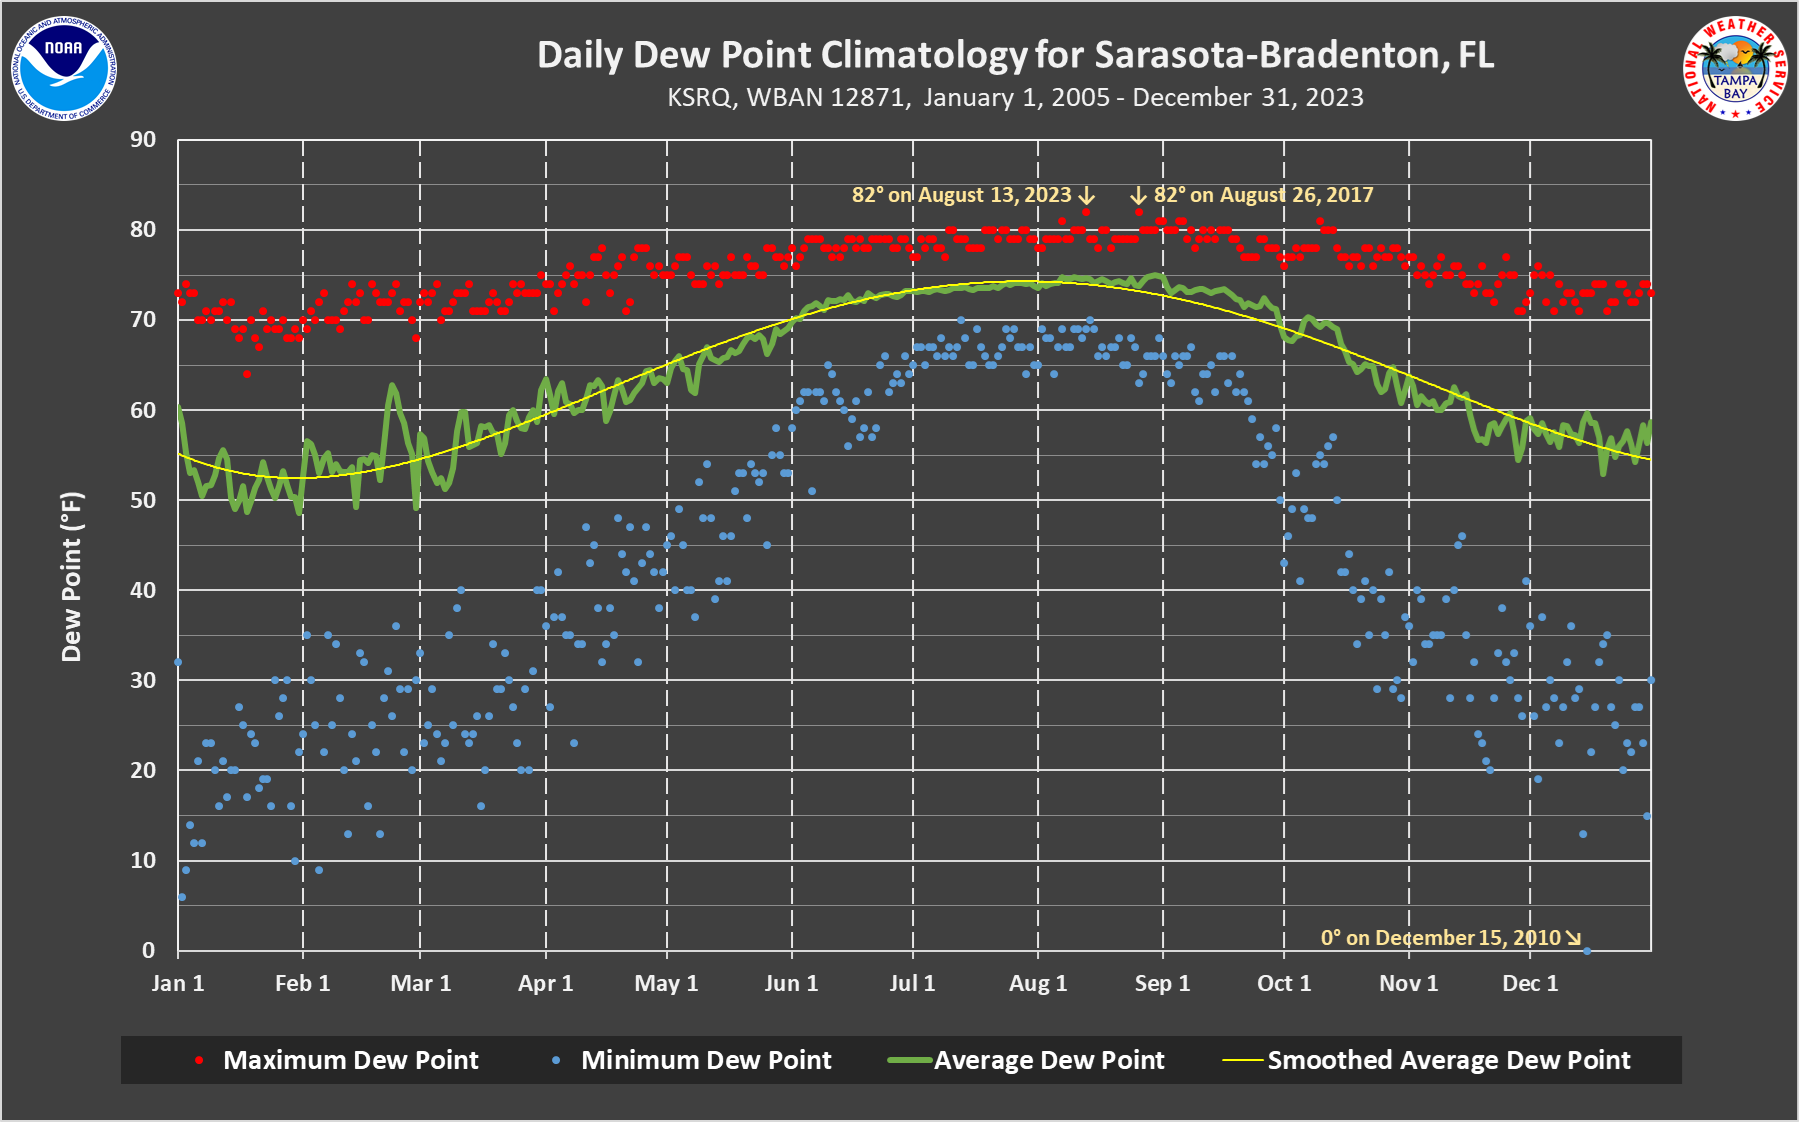 Daily Dew Point Climatology graph for Sarasota-Bradenton, FL